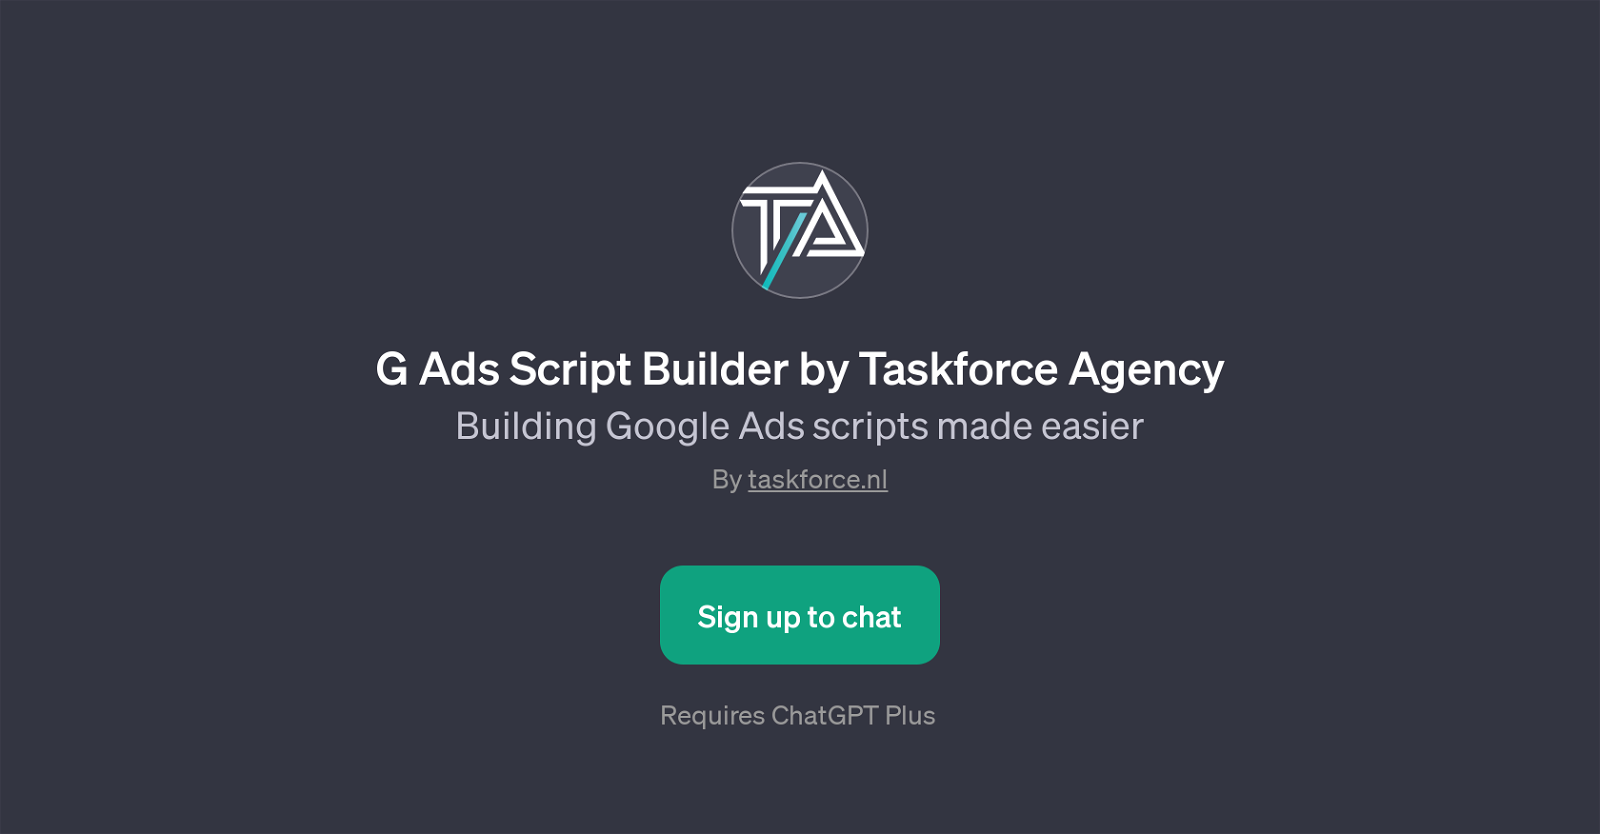 G Ads Script Builder by Taskforce Agency website